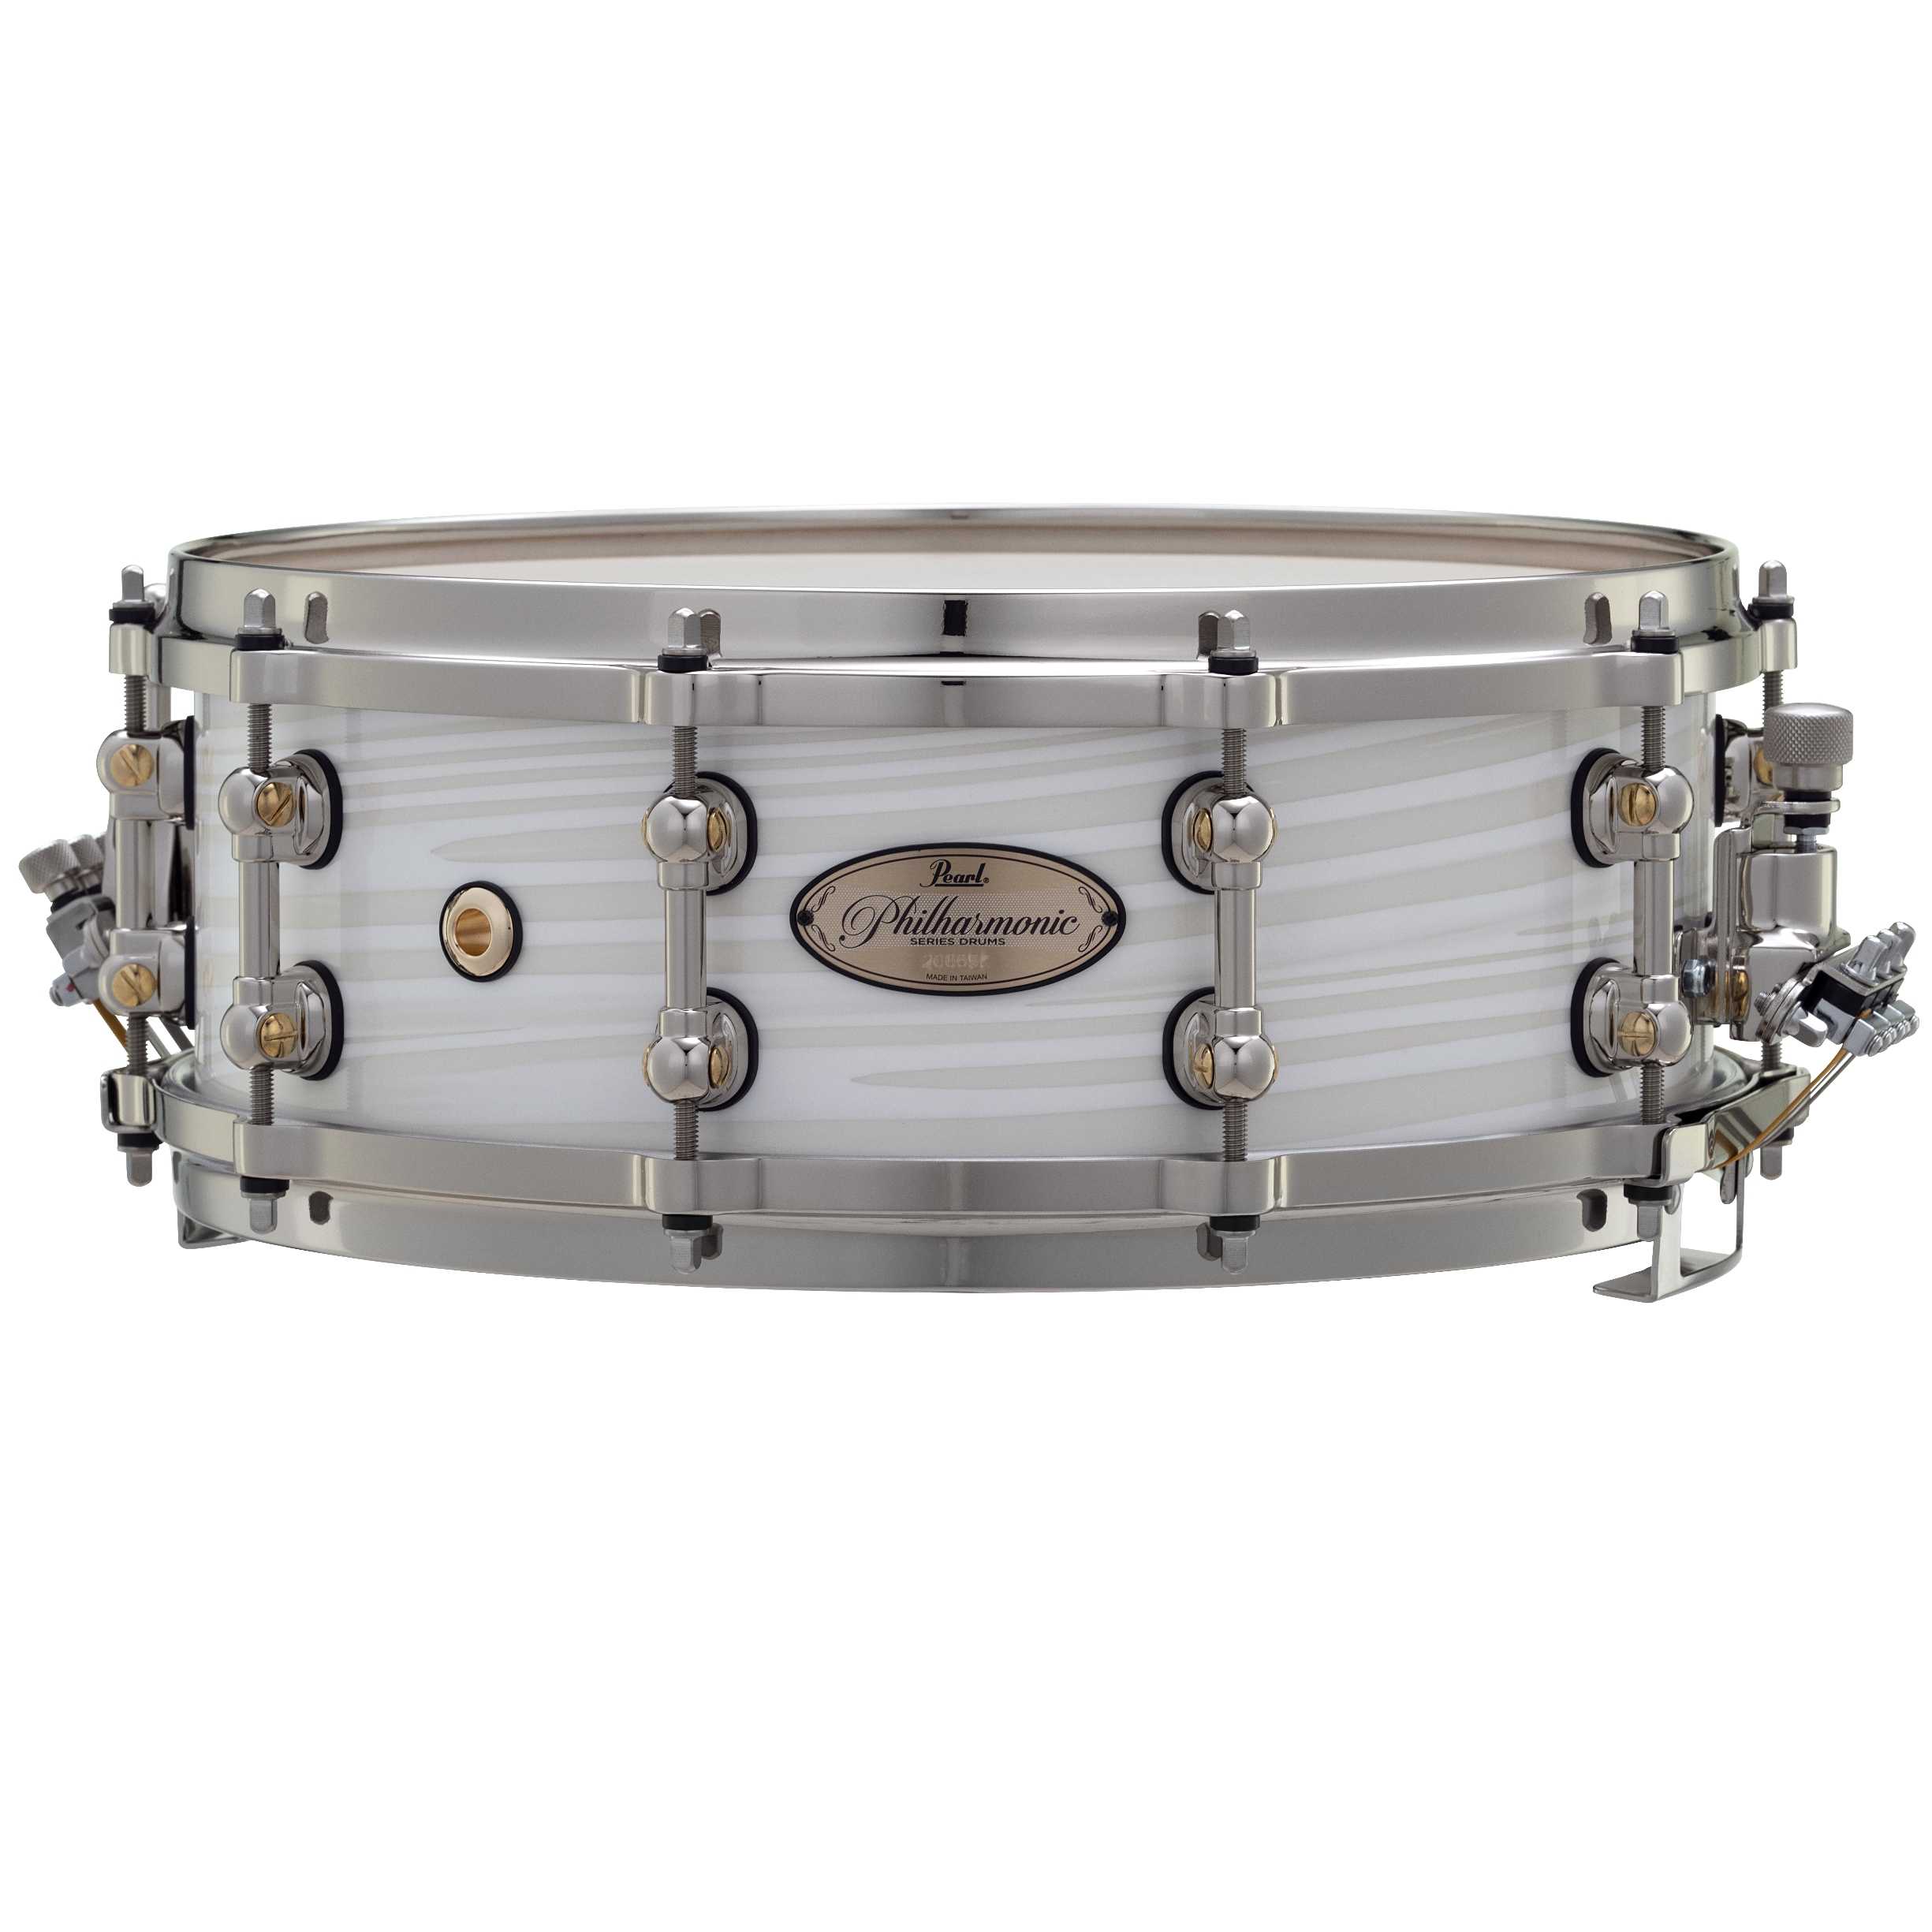 Pearl Philharmonic 75th Anniversary Snare Drum 14x5 Silver White Swirl